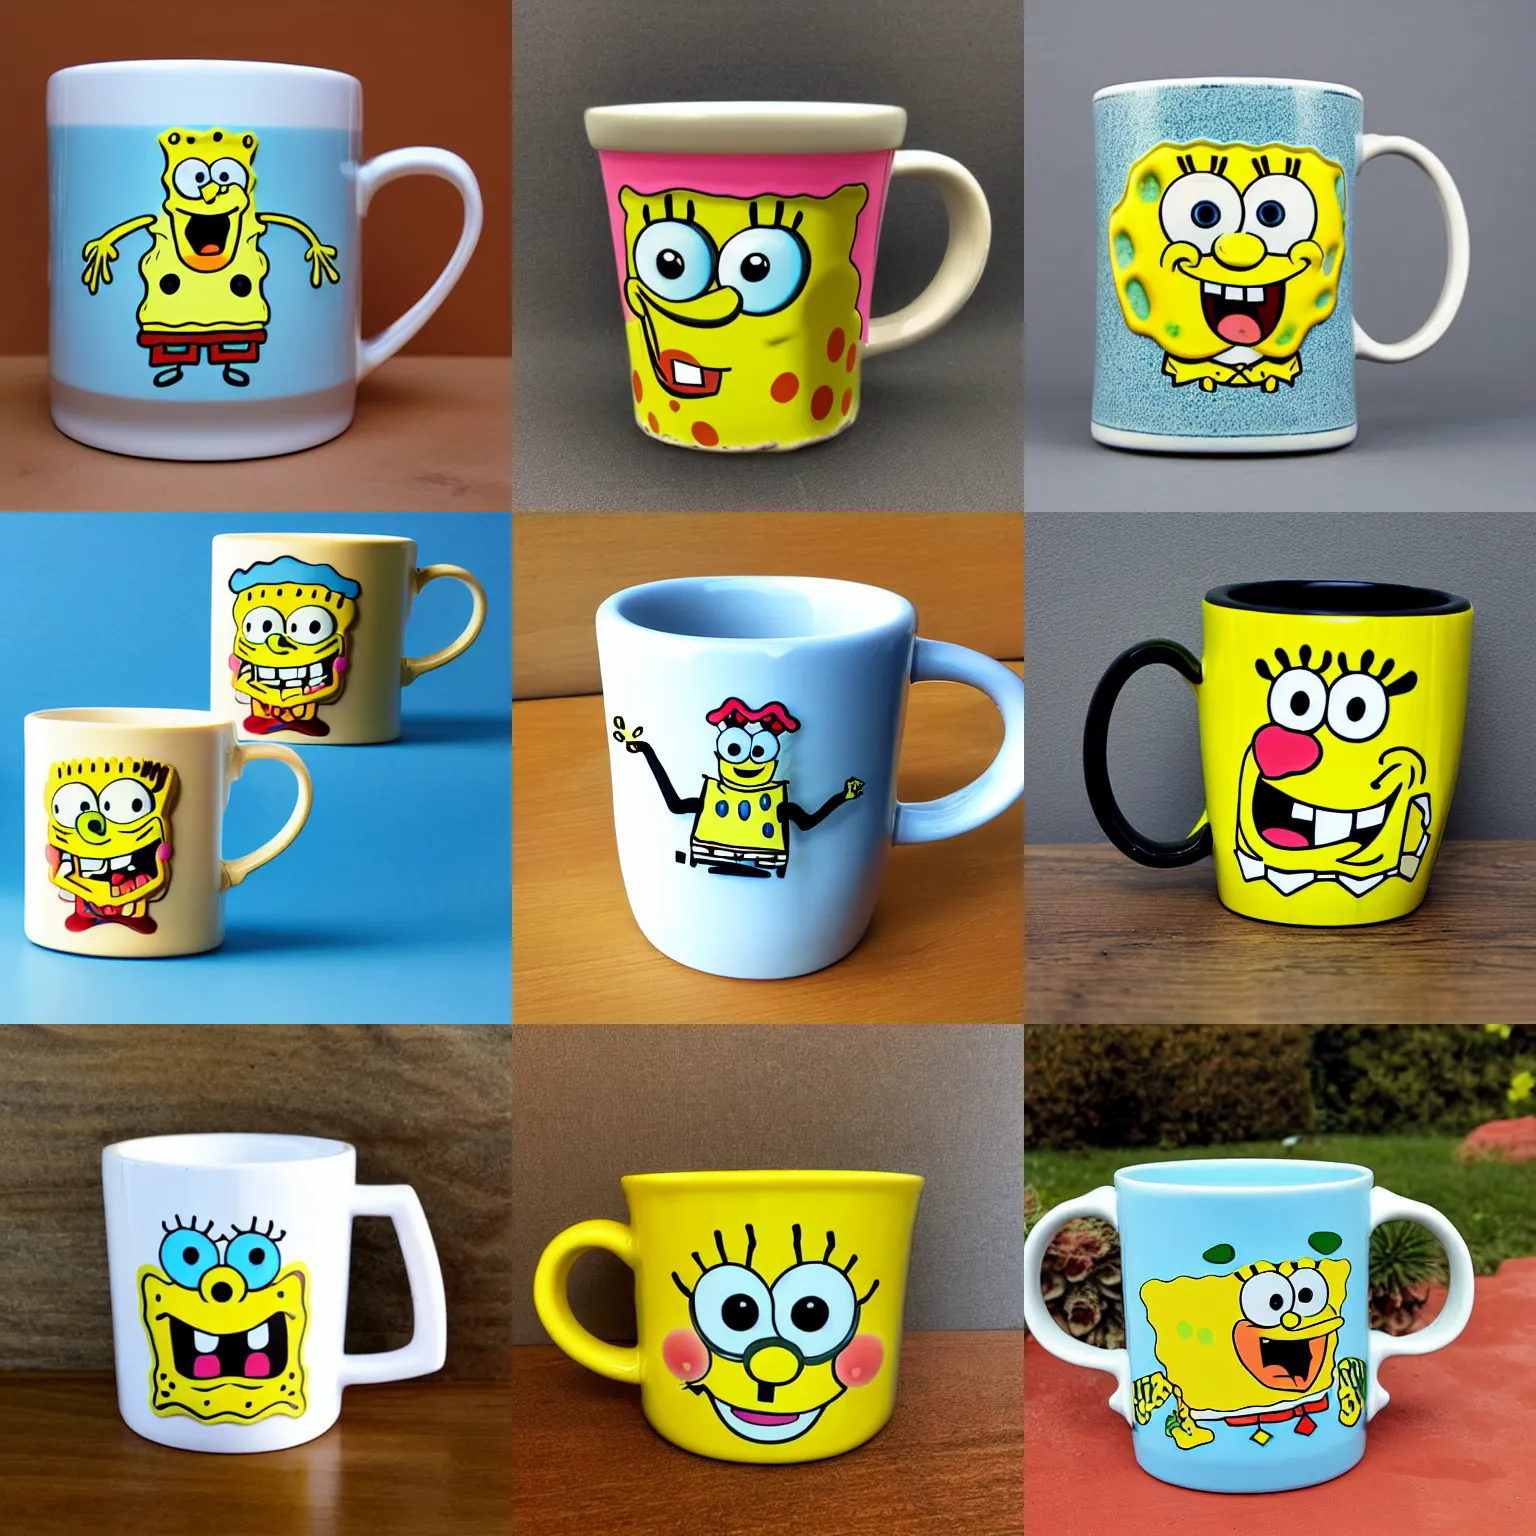 Prompt: spongebob mug